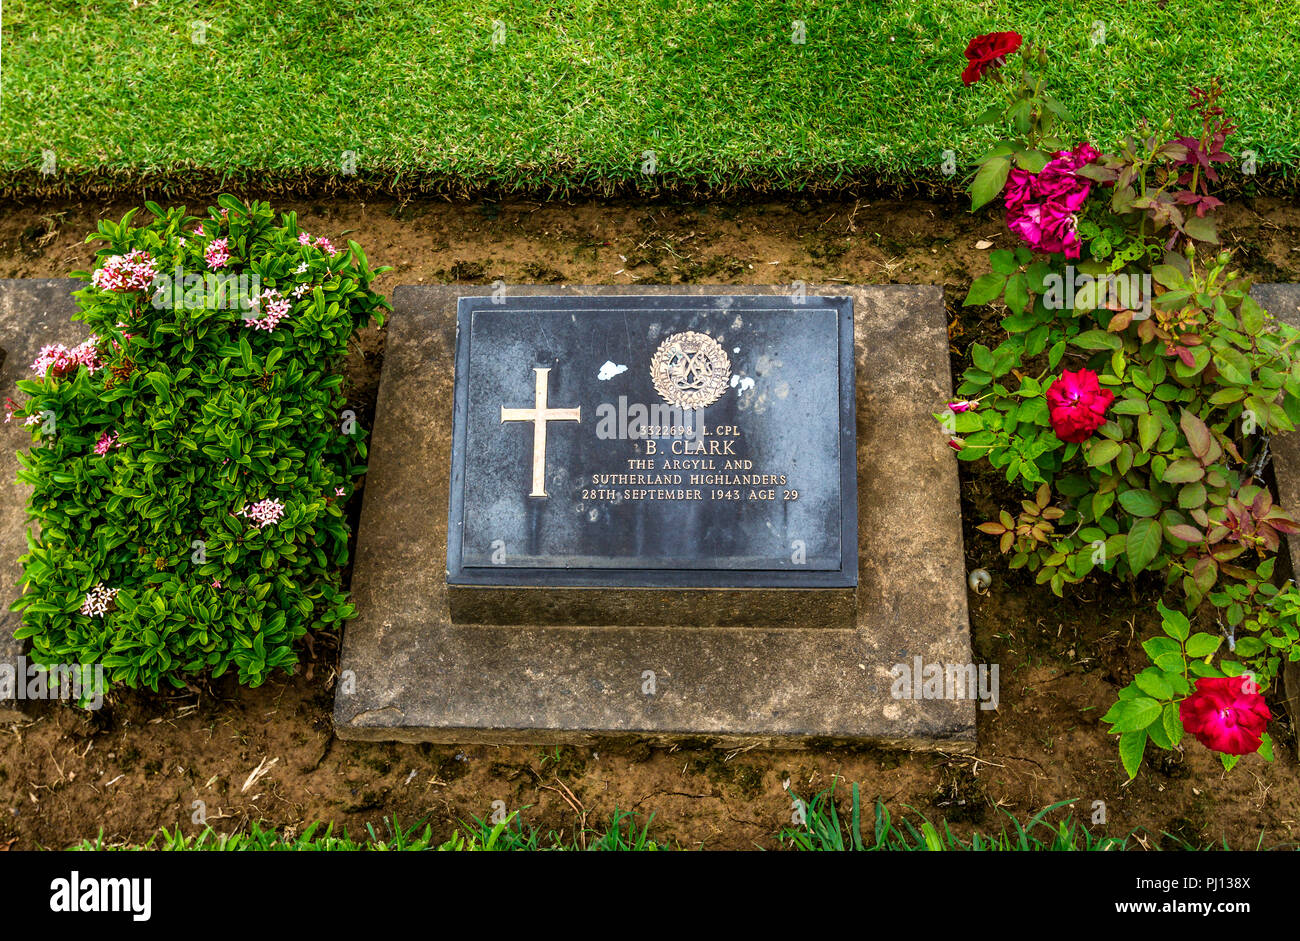 Chong Kai Allied War Cemetery, Kanchanaburi, 10/01/15 Grave marker from fallen WWii prisoner of war Stock Photo